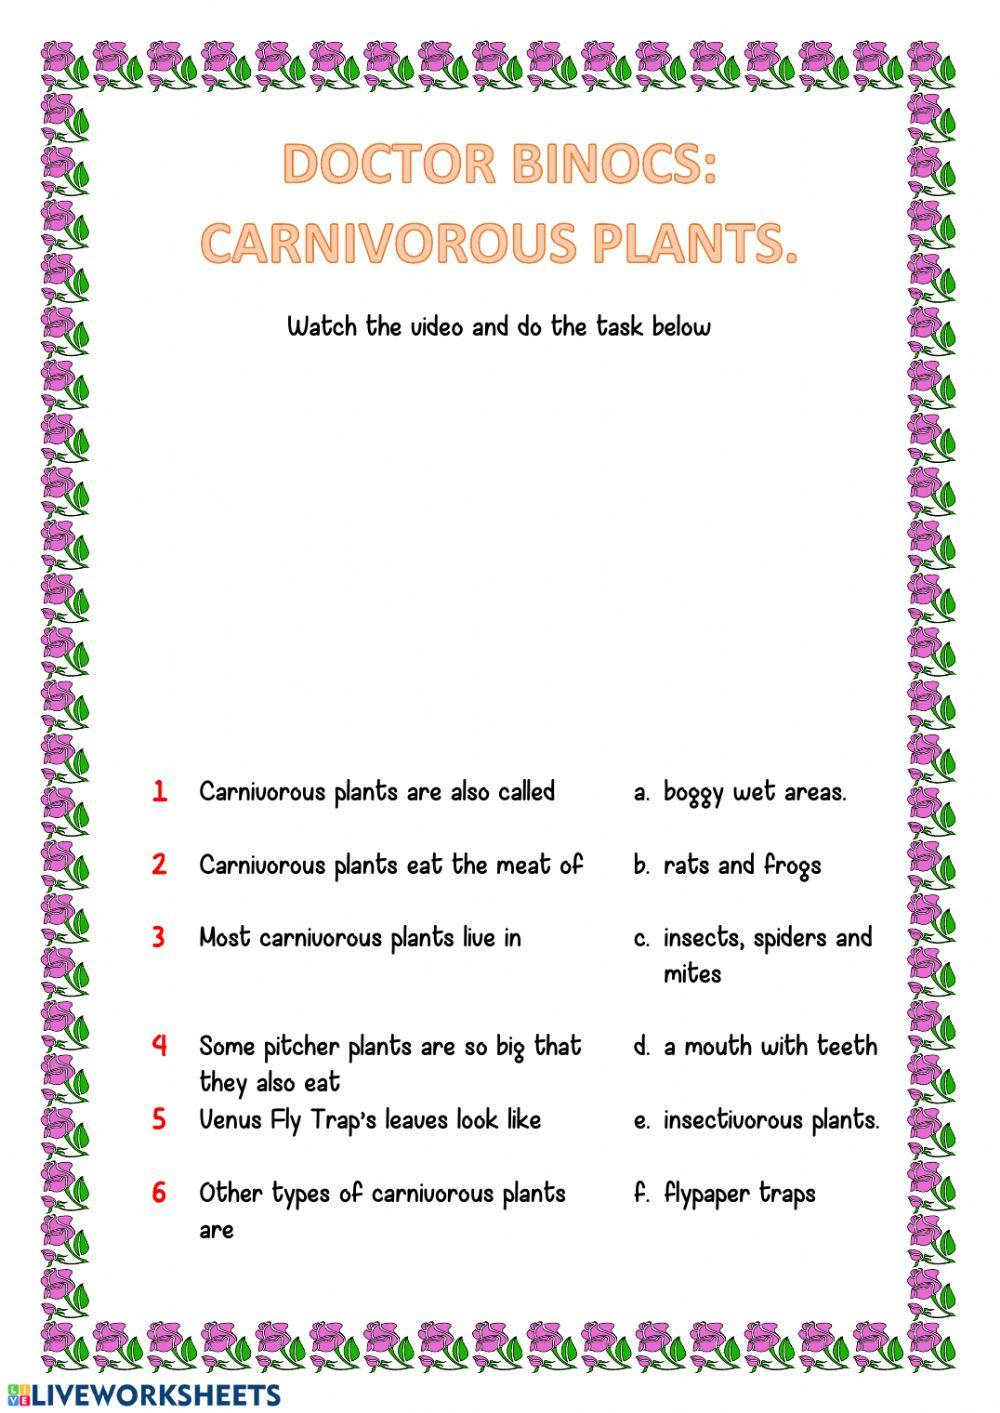 Doctor binocs: carnivorous plants